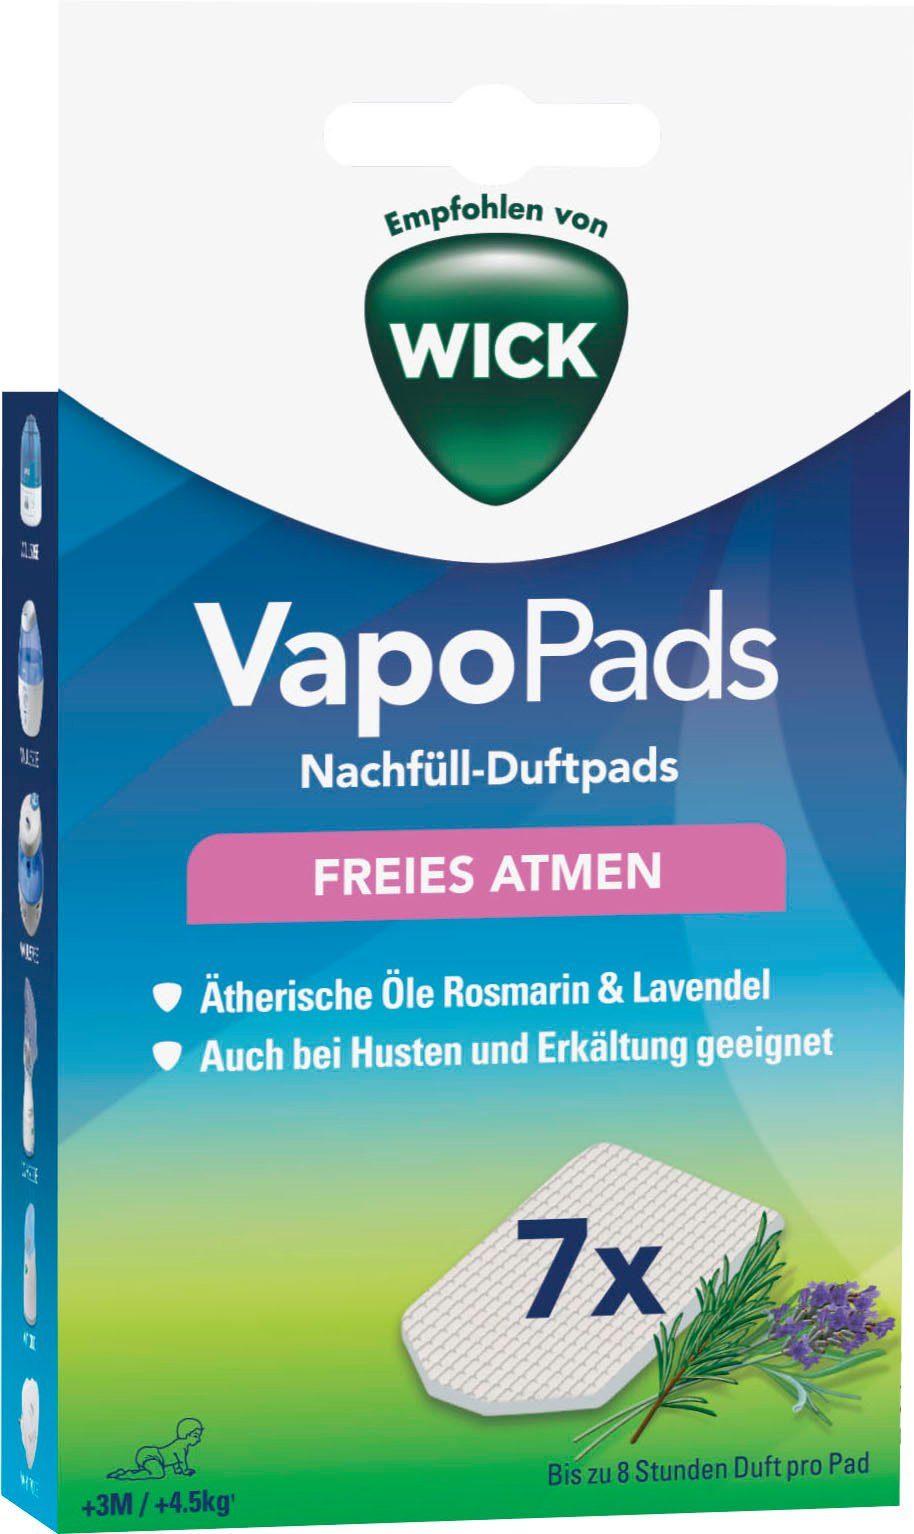 WICK Inhalations-Zusatz VapoPads Rosmarin & Lavendel - VBR Packung, 7-tlg., Passen zu unseren Увлажнитель воздухаn, Inhalatoren & Diffusoren, 7er-Pack